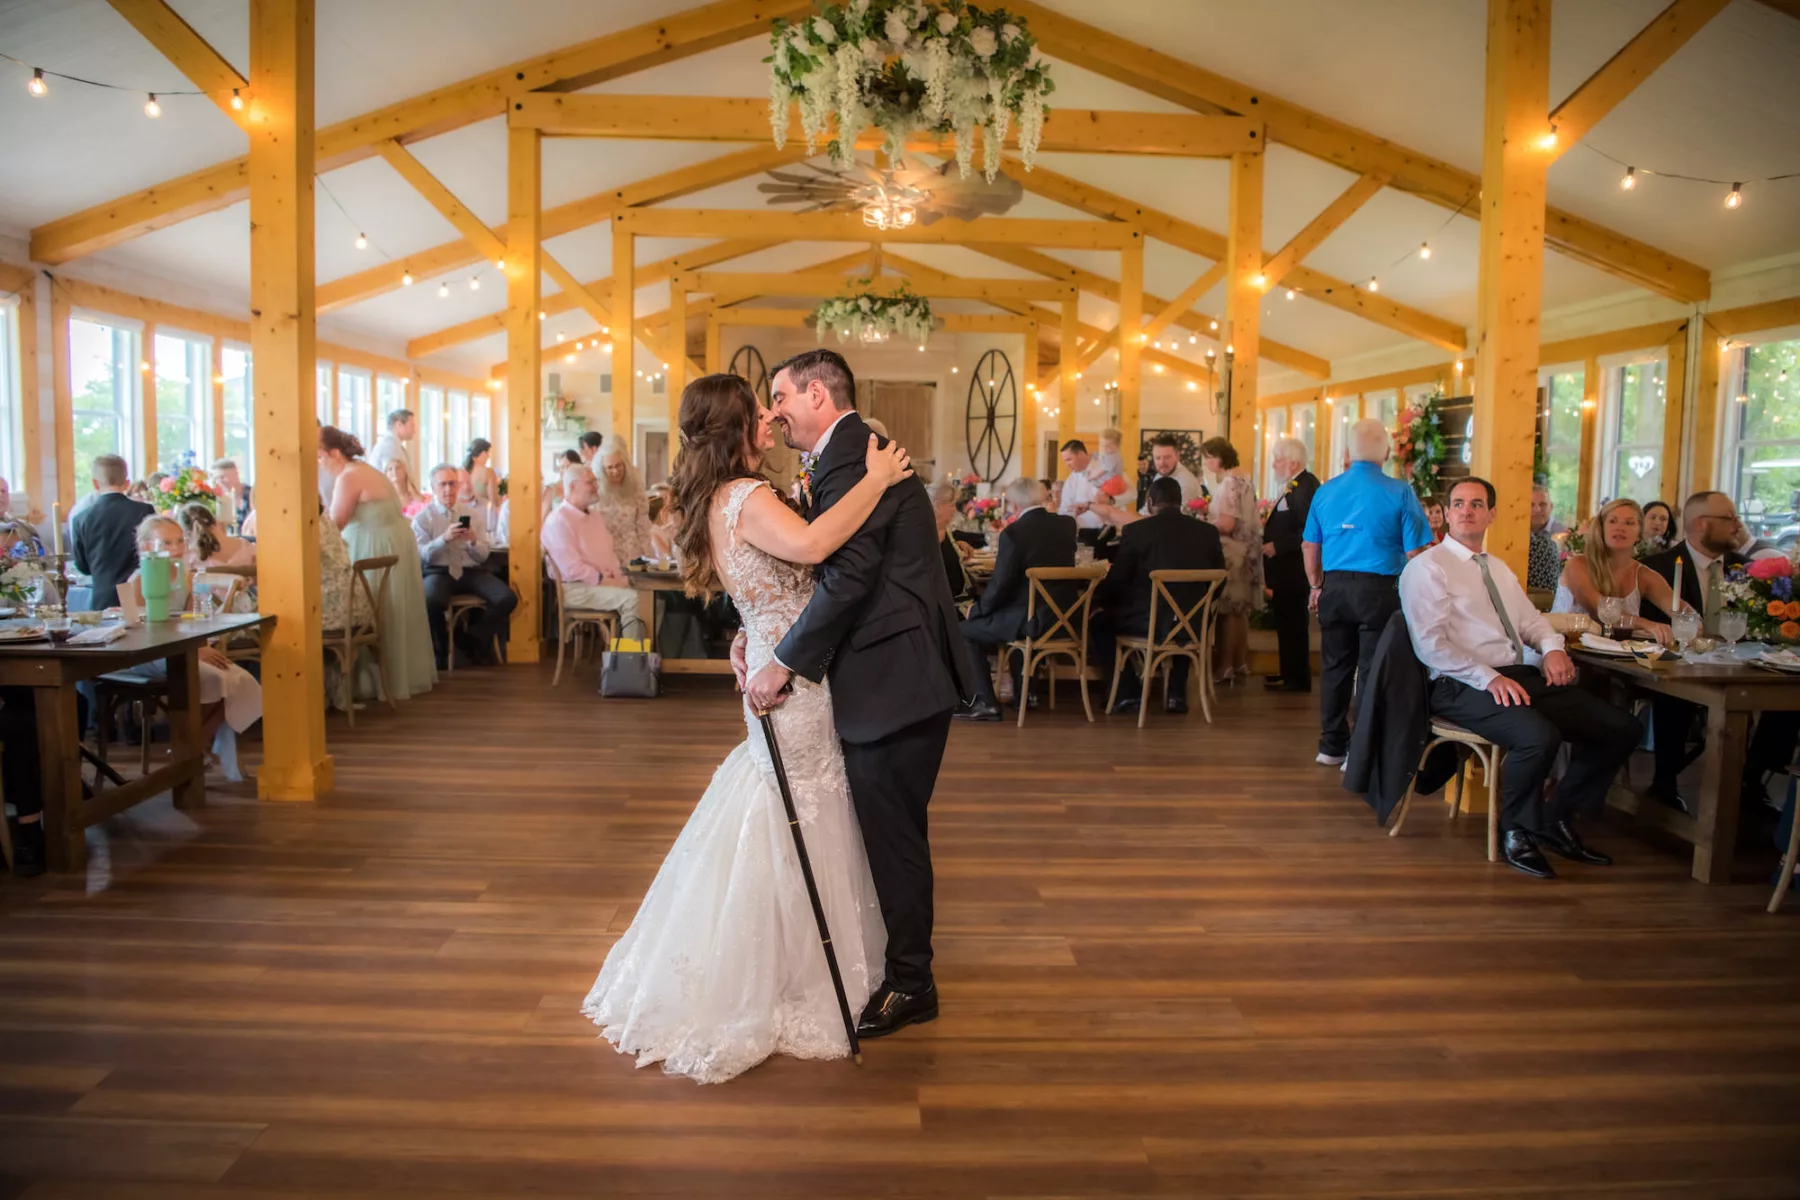 Bride and Groom First Dance Wedding Portrait | Brooksville Event Venue Legacy Barn Wedding Reception Legacy Lane Weddings | Tampa Bay DJ Grant Hemond and Associates